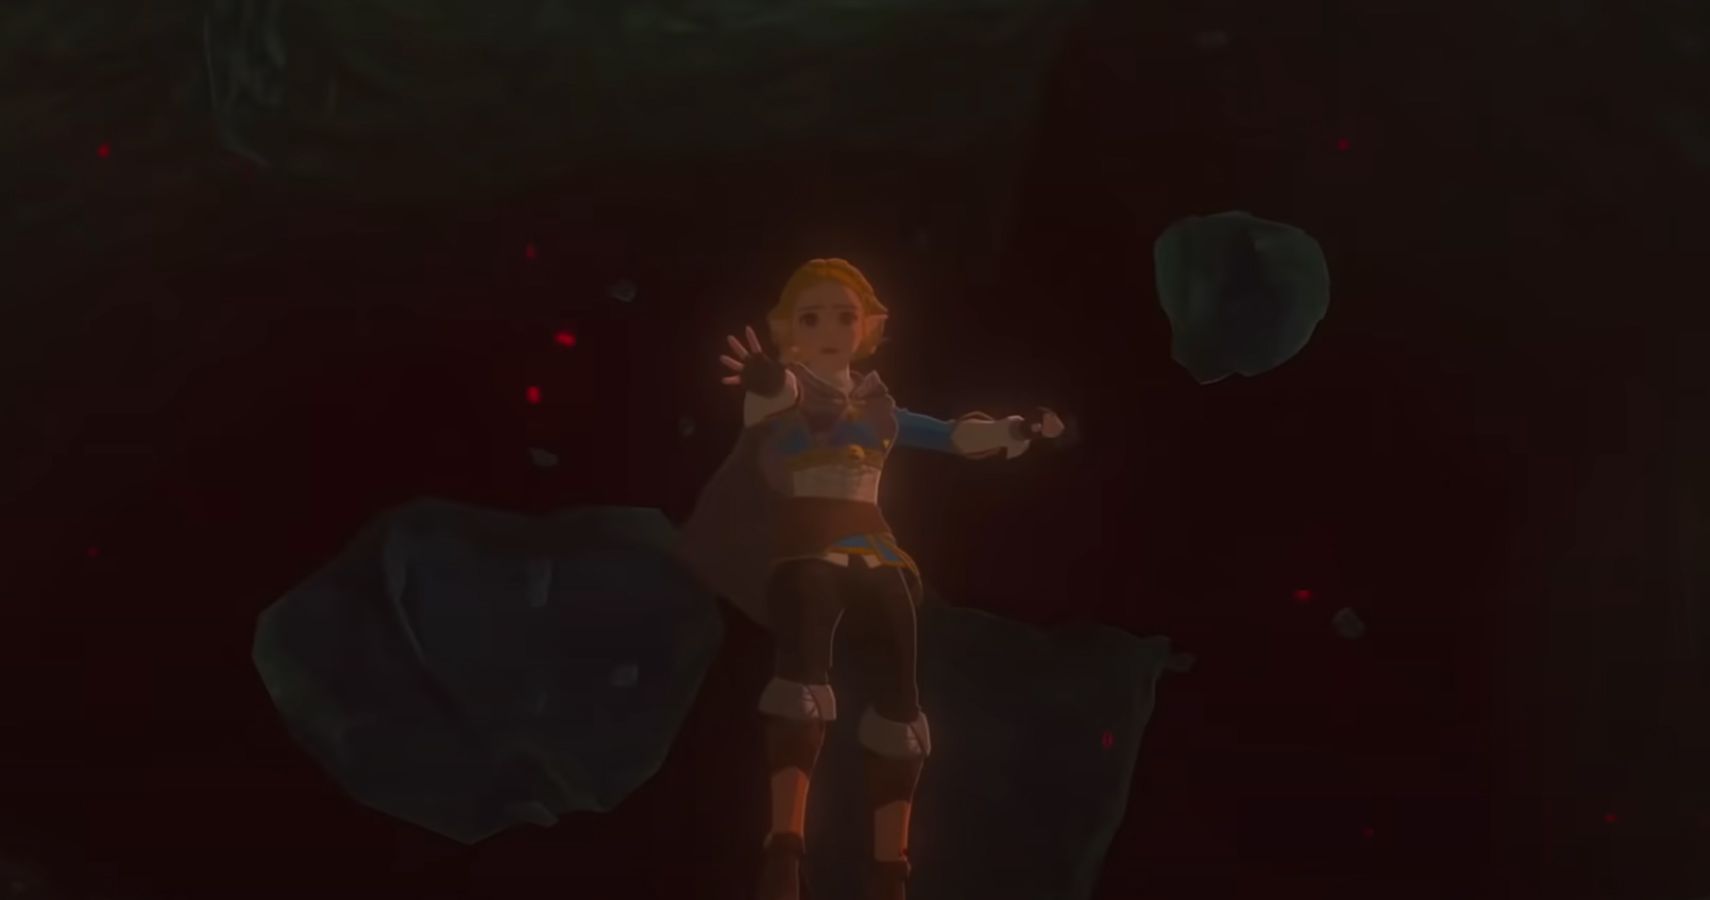 Zelda falling in the BOTW2 trailer